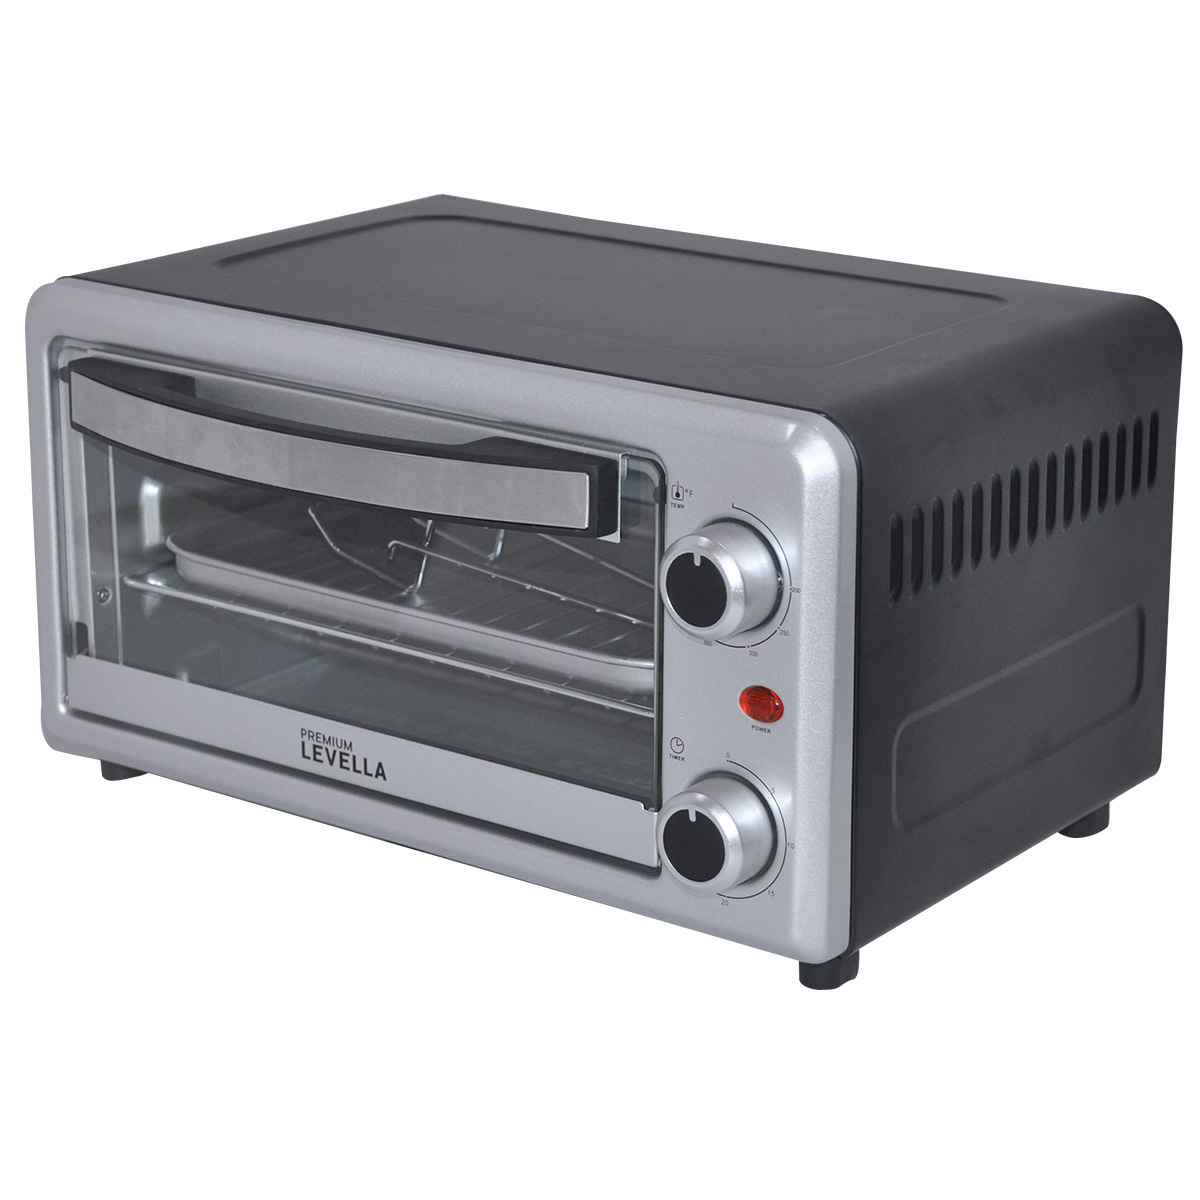 Premium Levella 4 Slice Toaster Oven 